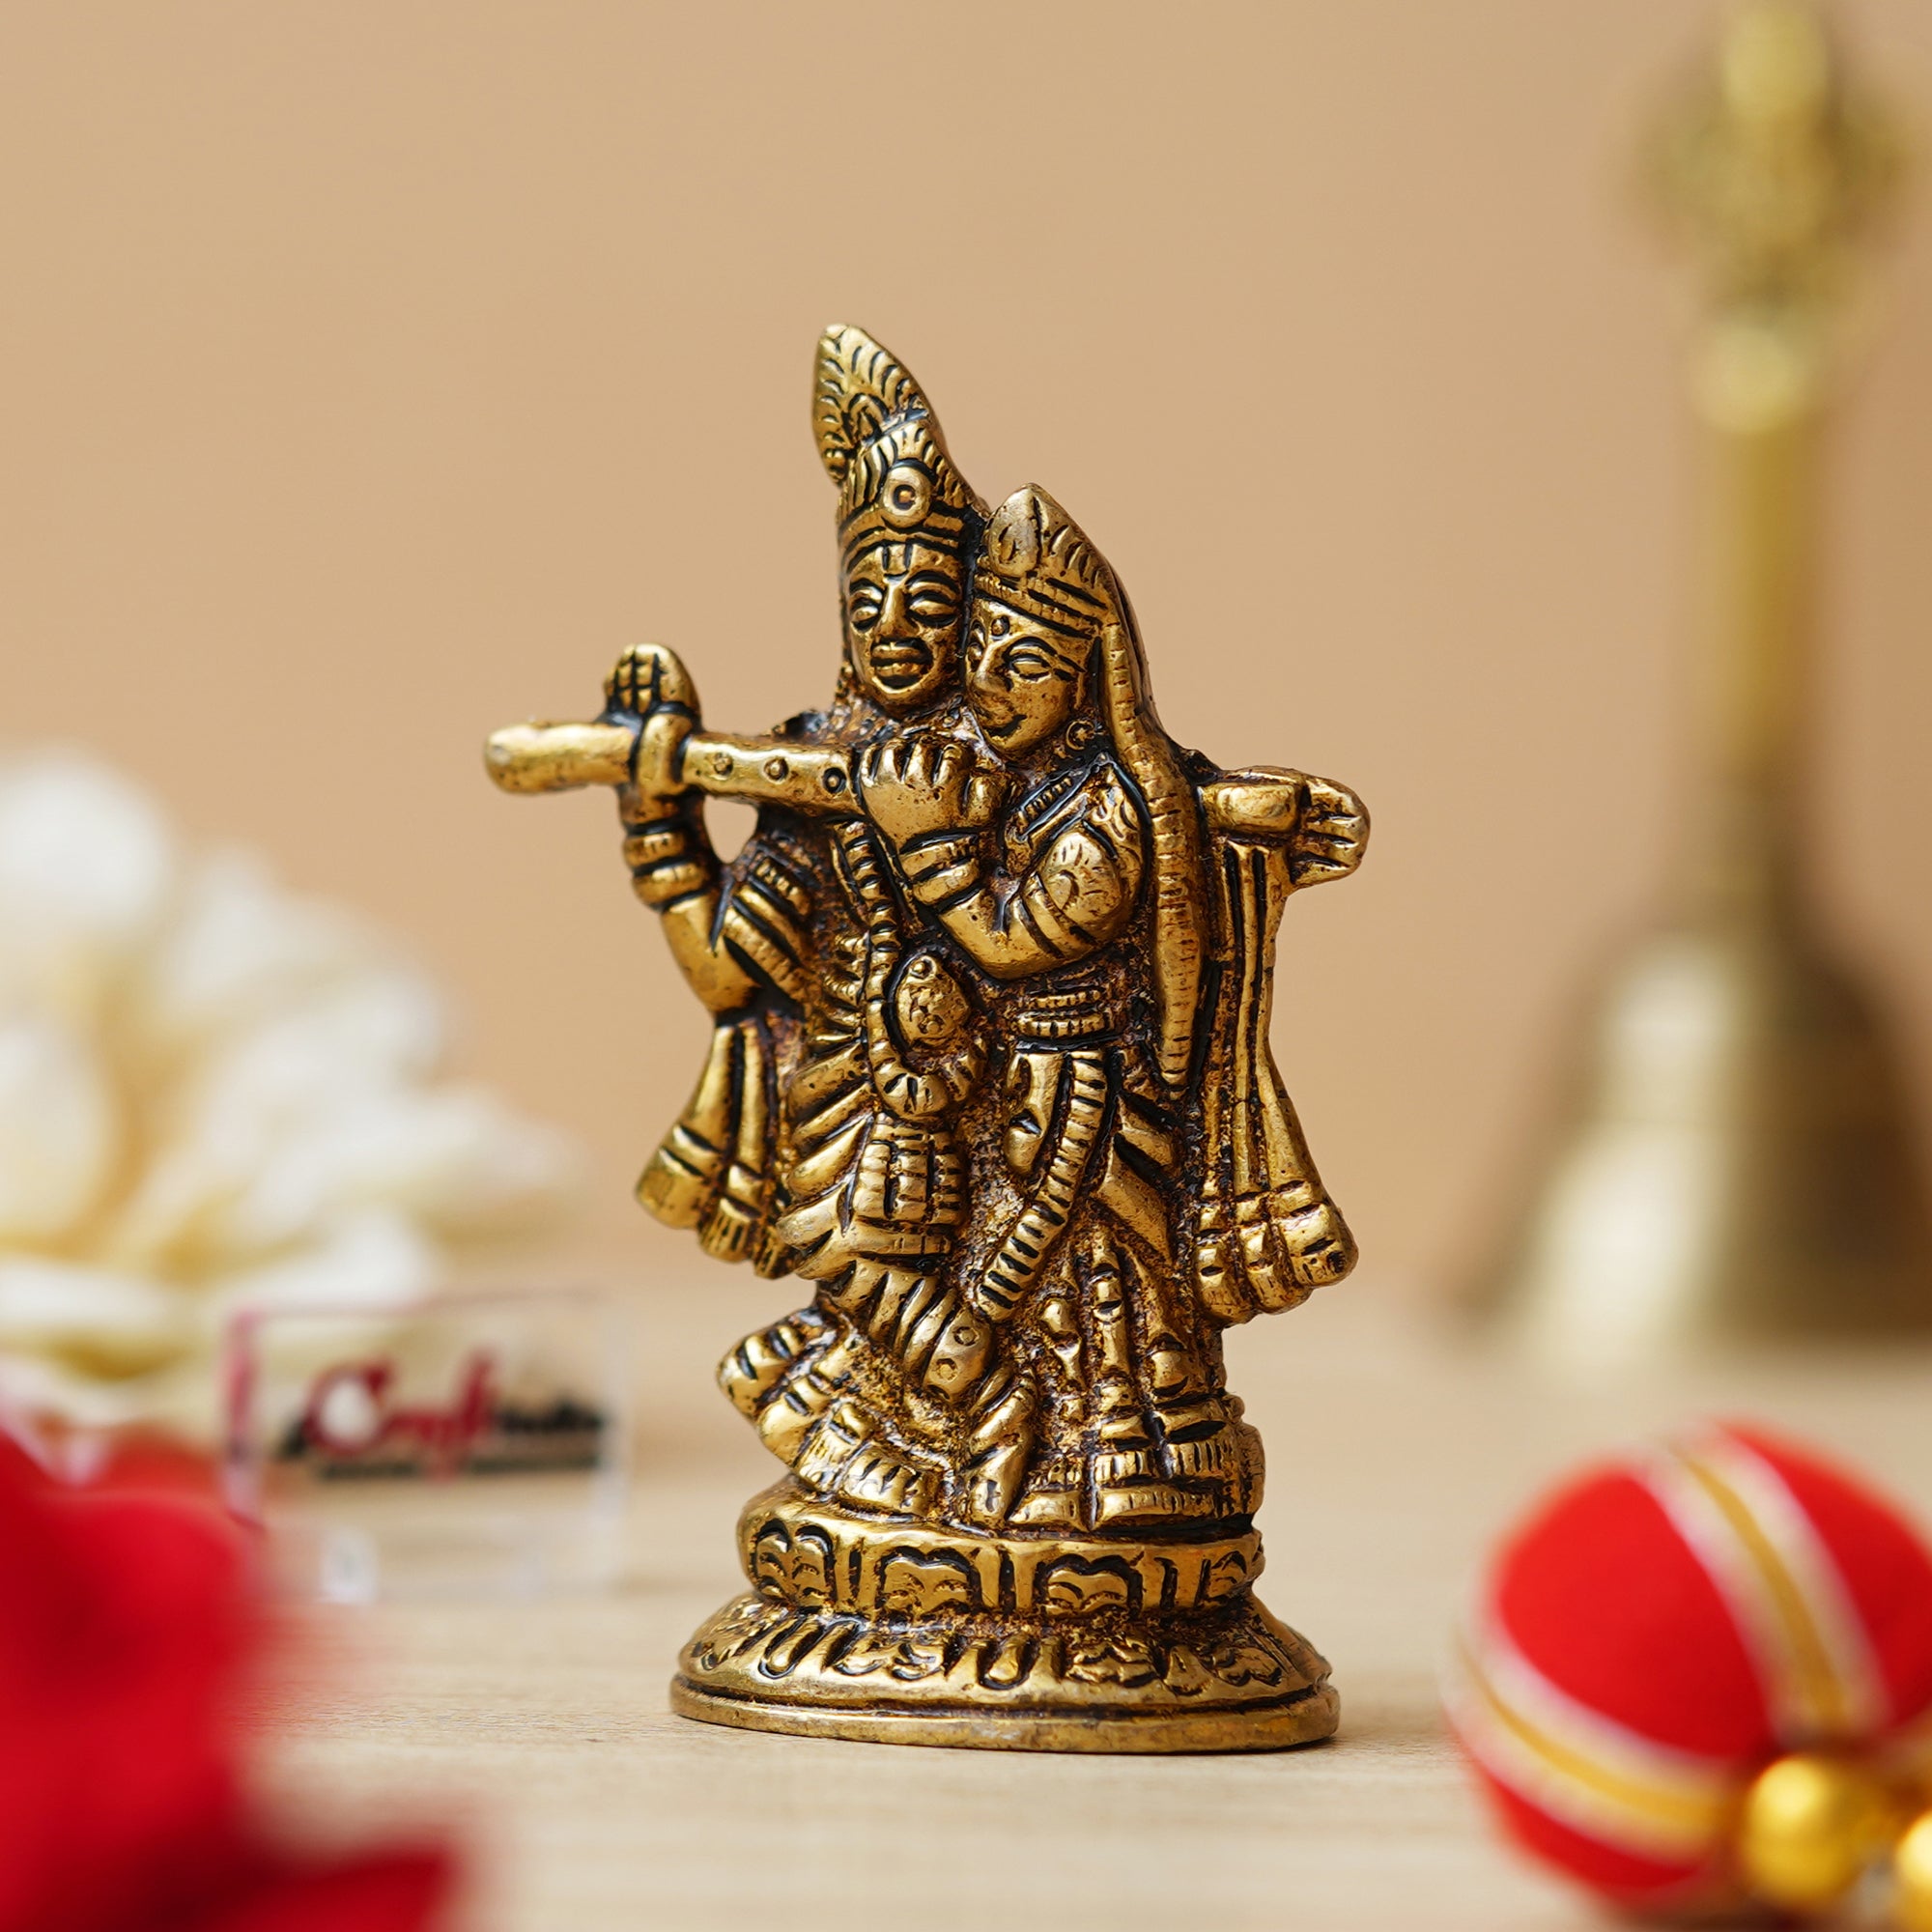 Golden Brass Radha Krishna Murti Idol - God Goddess Statue Decorative Showpiece for Home, Office, Car Dashboard - Gift for Festivals like Janmashtami, Radha Ashtami, and Diwali 5